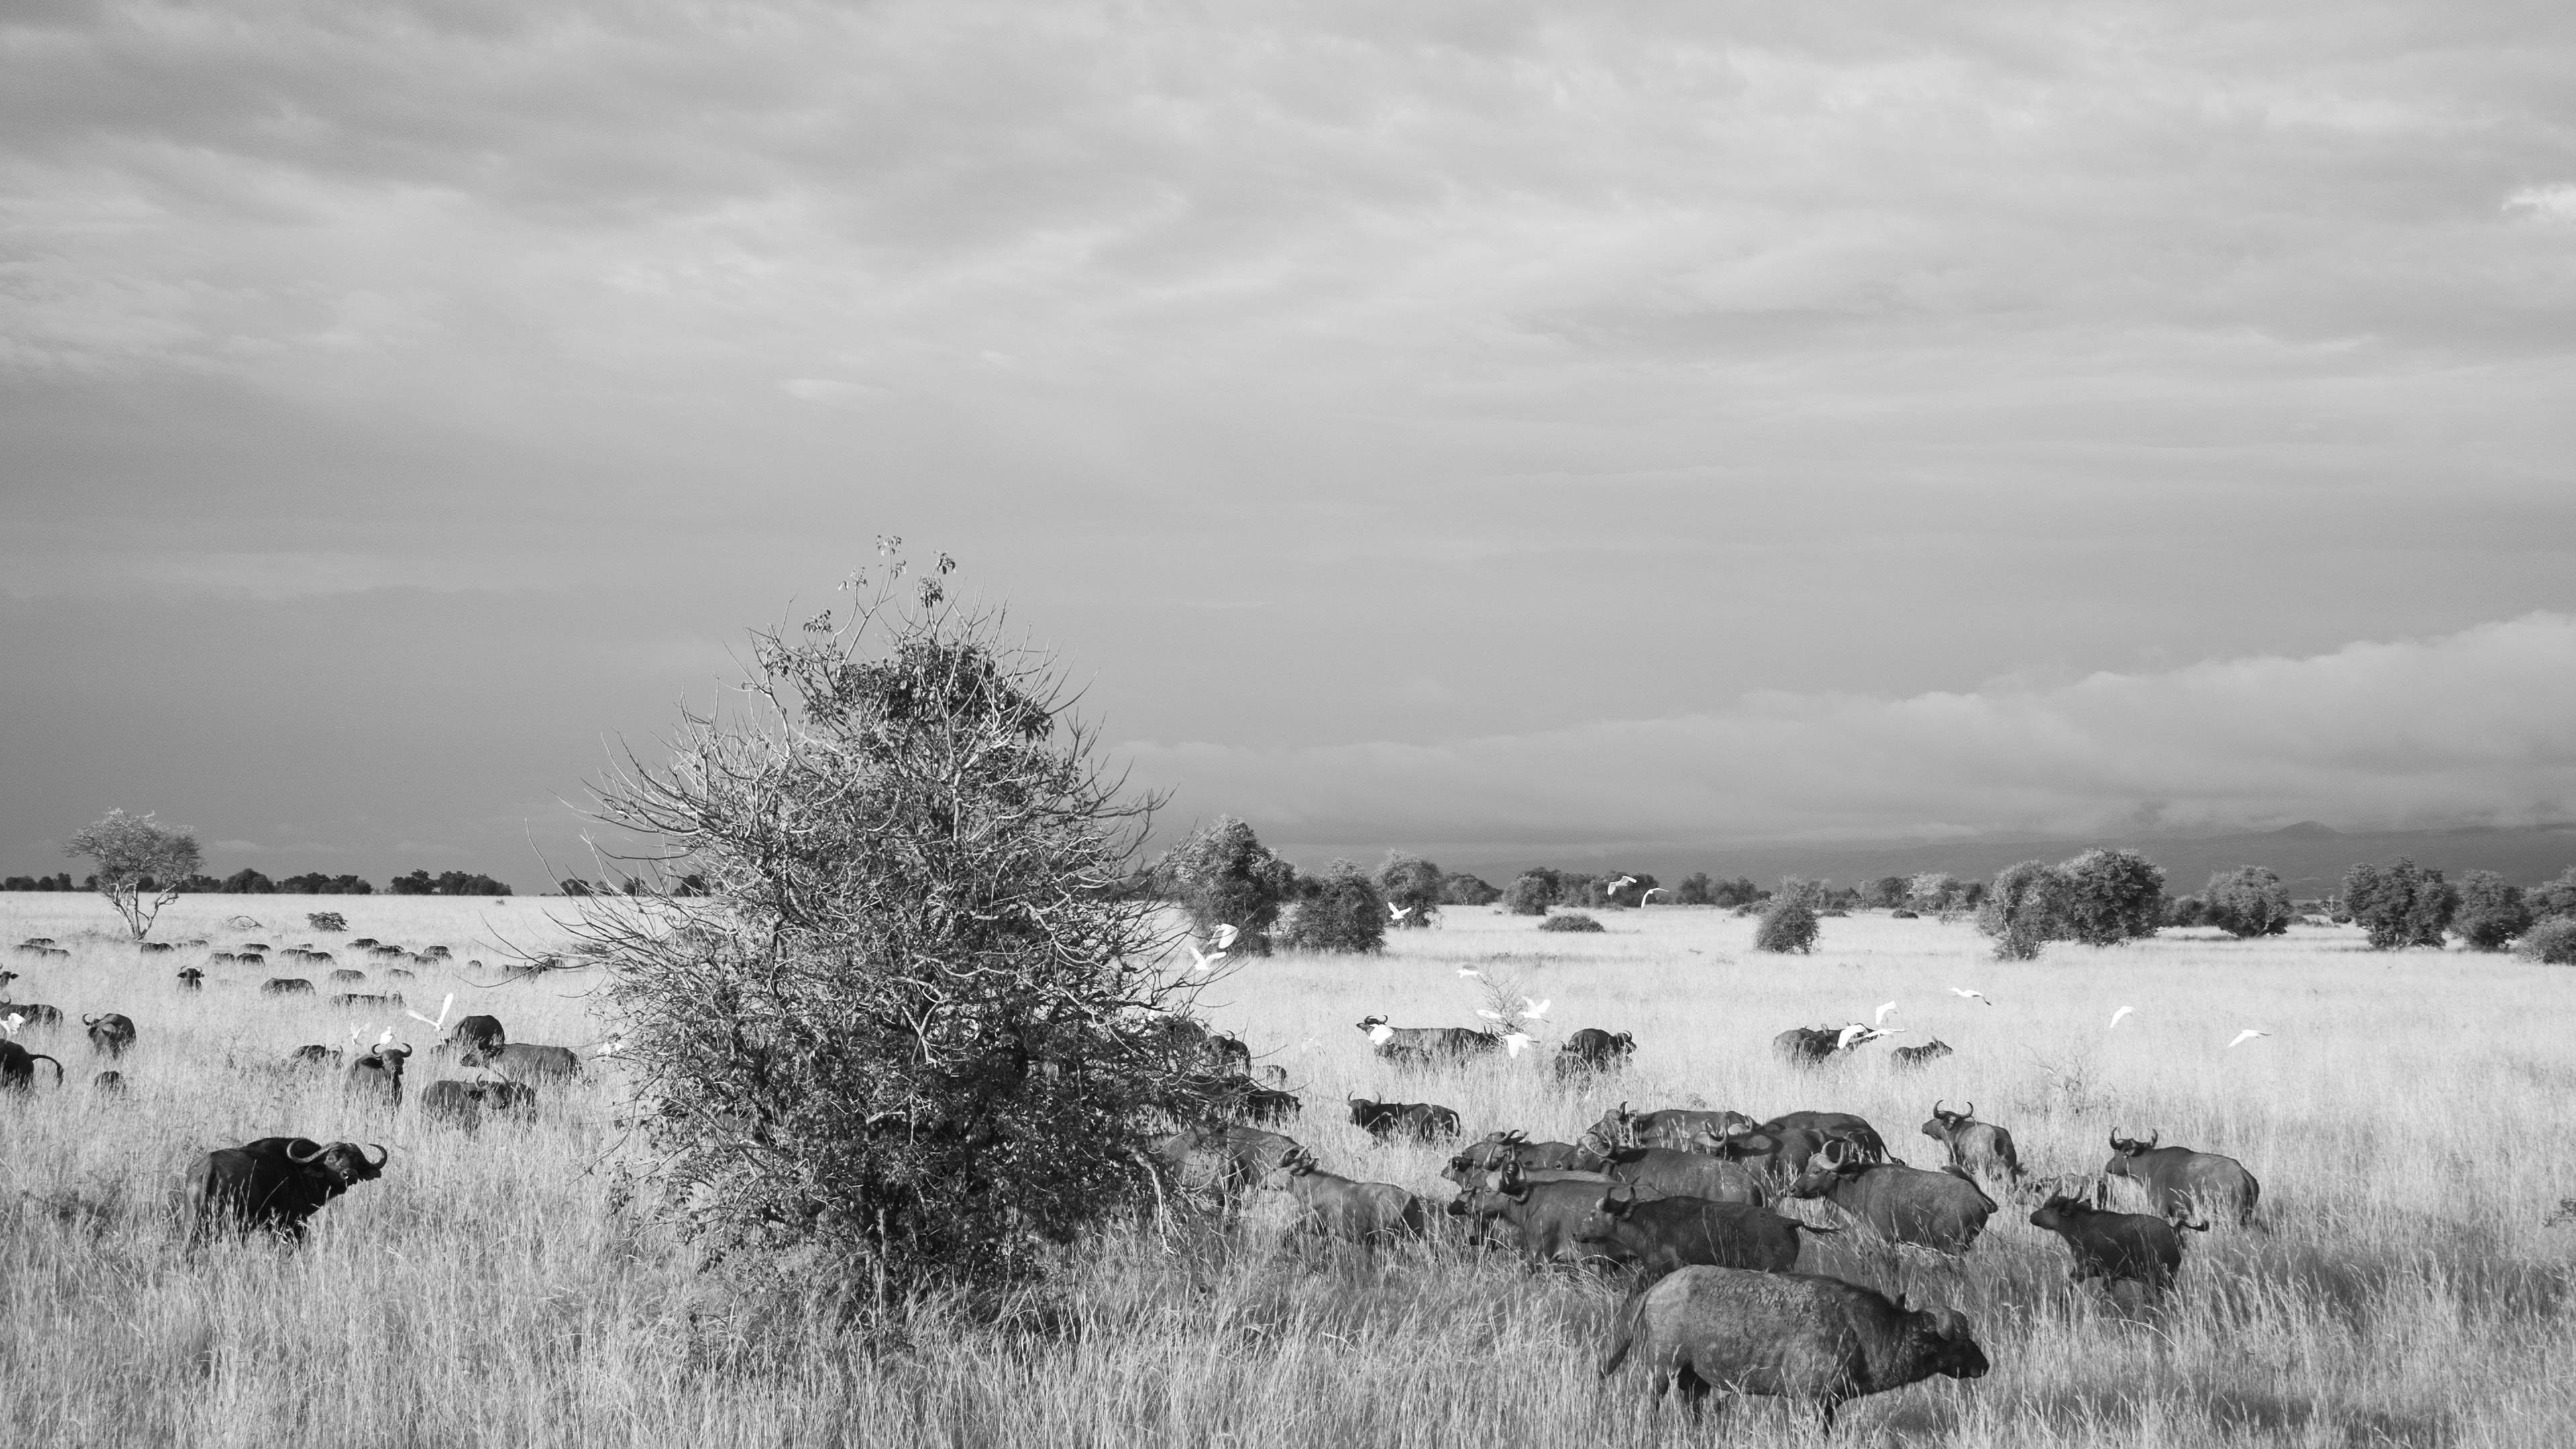 General 3840x2160 landscape monochrome animals wildlife buffalo Africa nature